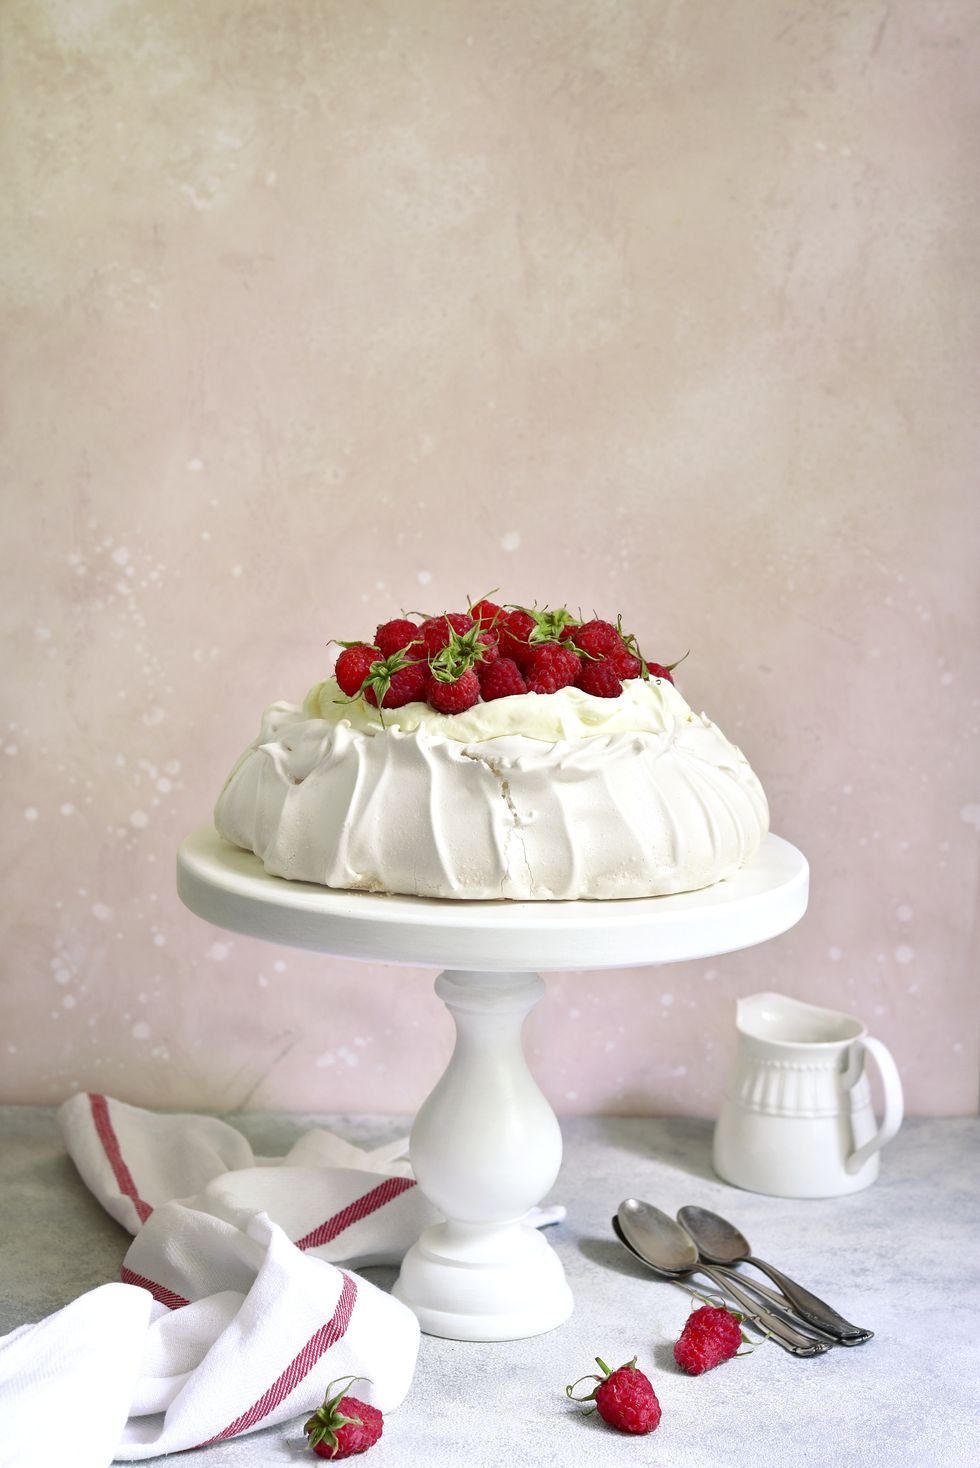 meringue cake "pavlova" with fresh ripe raspberry and whipped cream